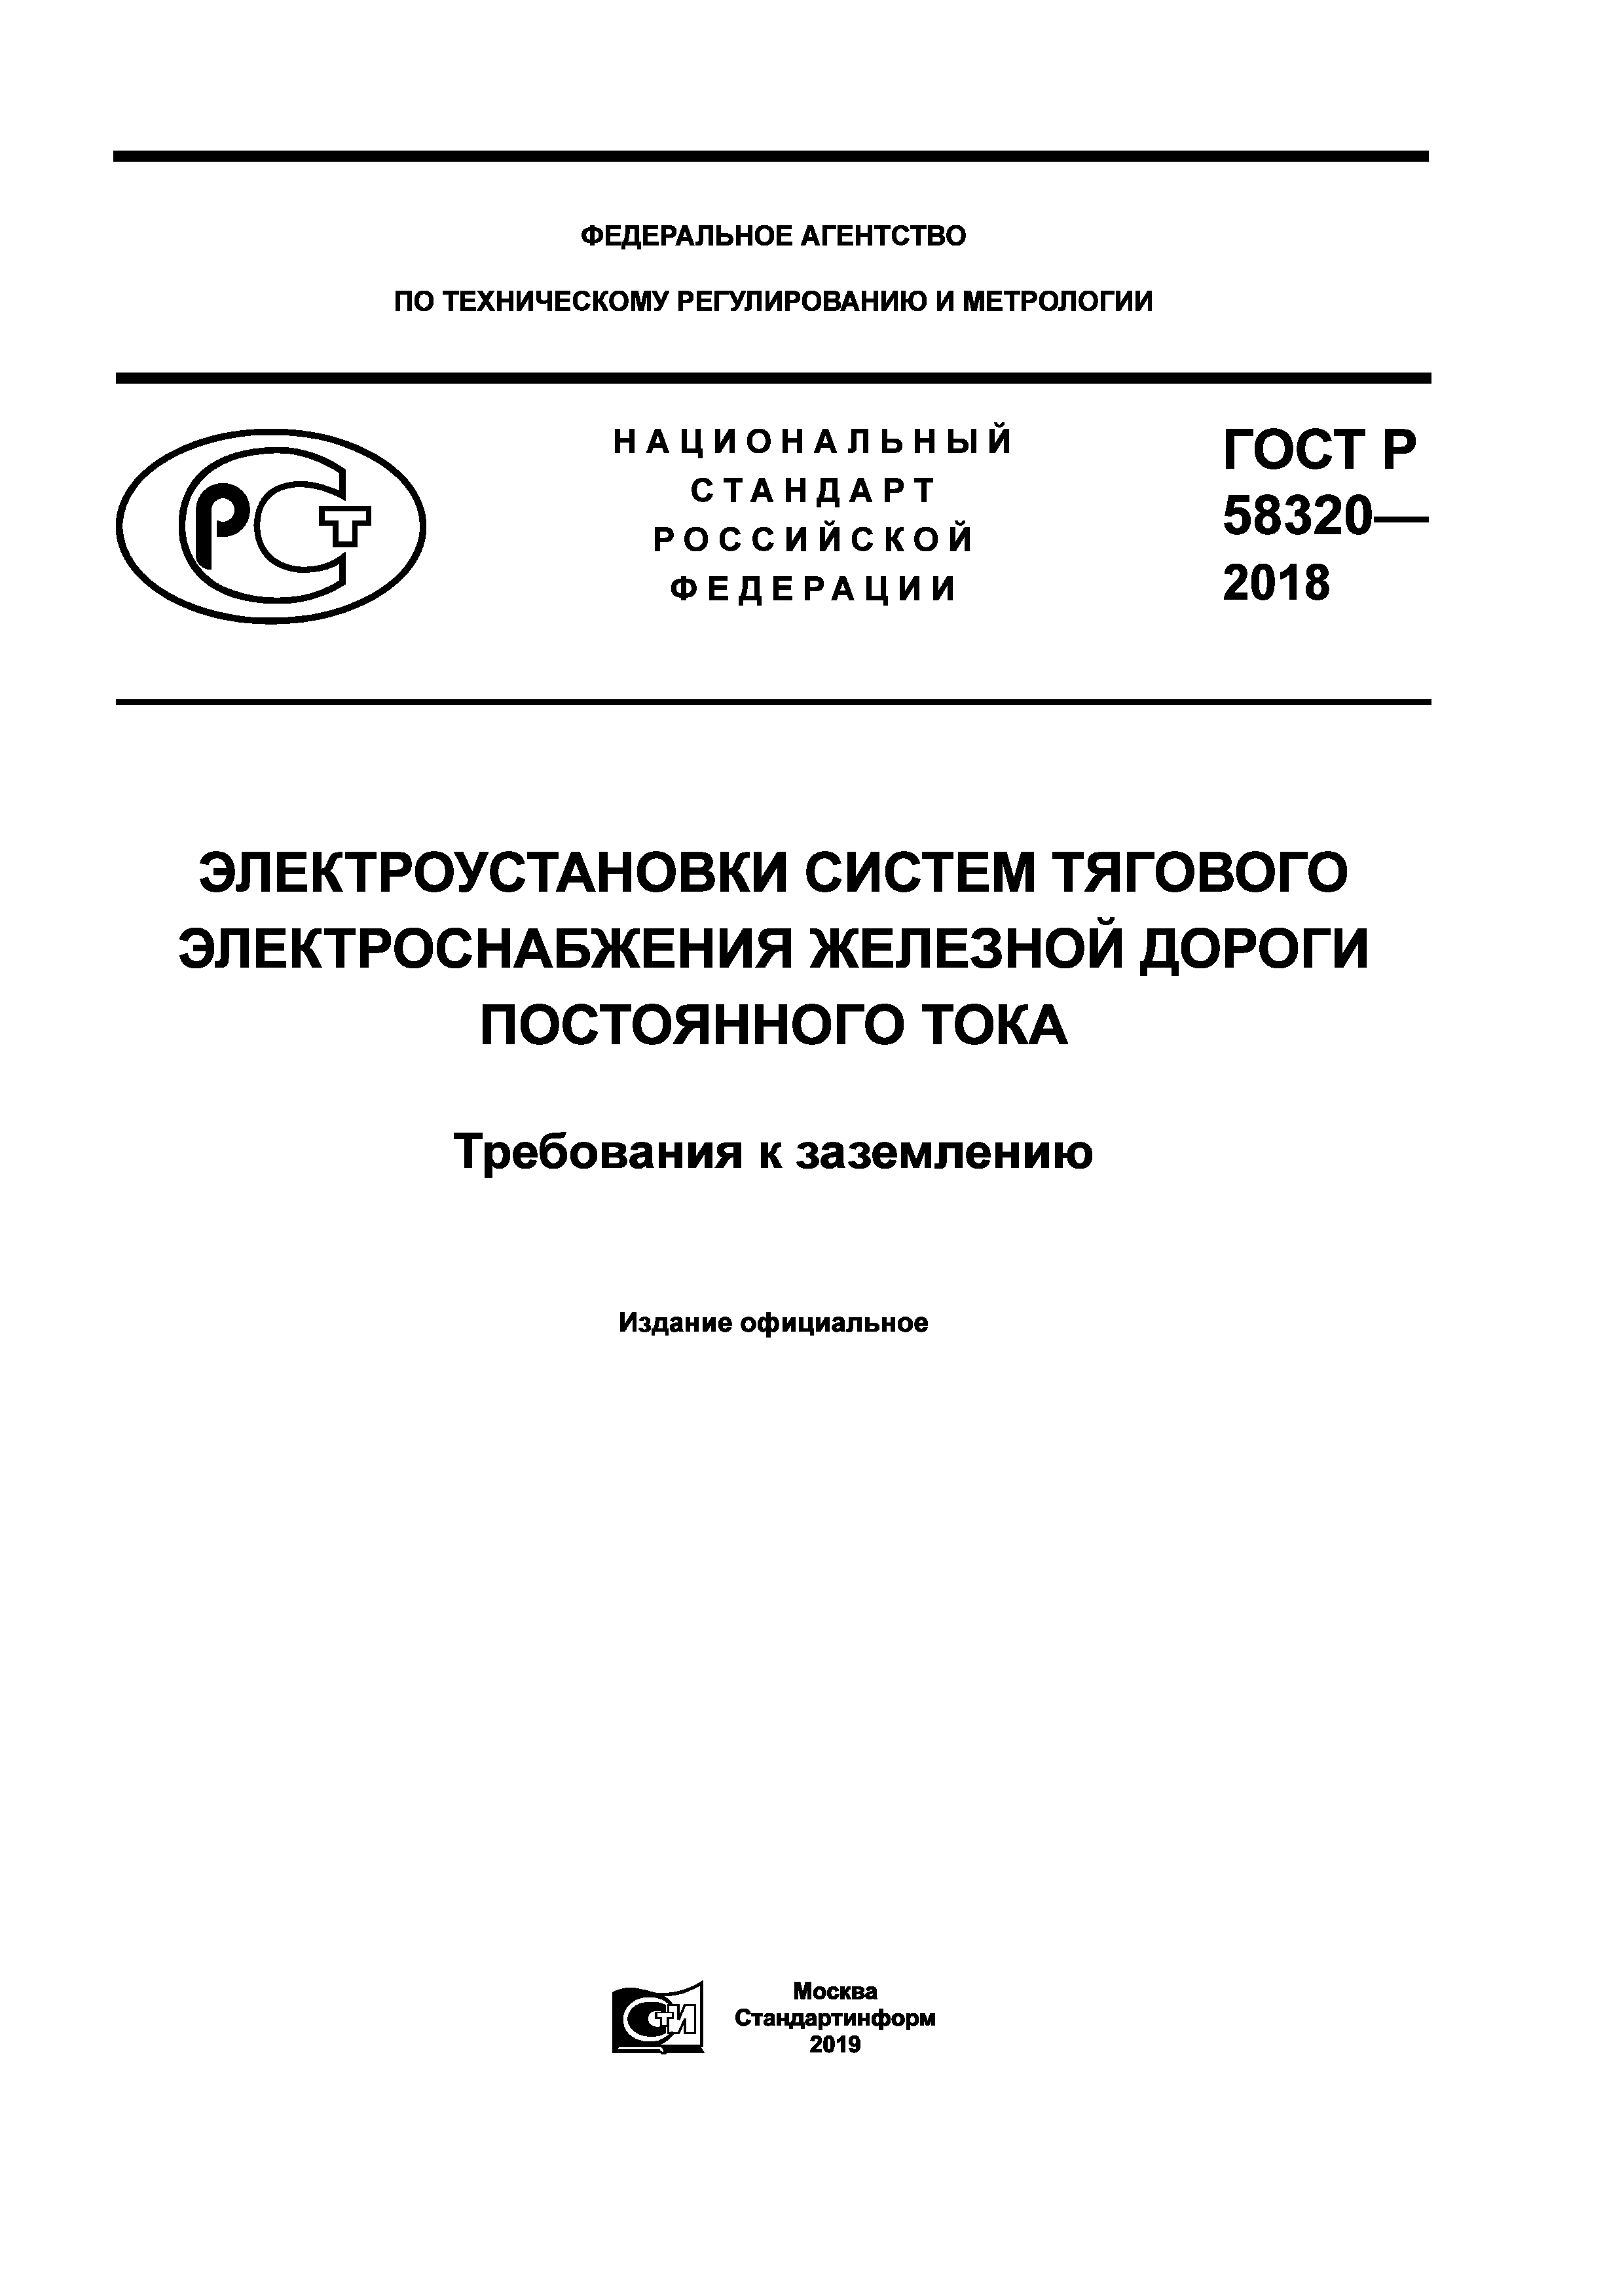 ГОСТ Р 58320-2018